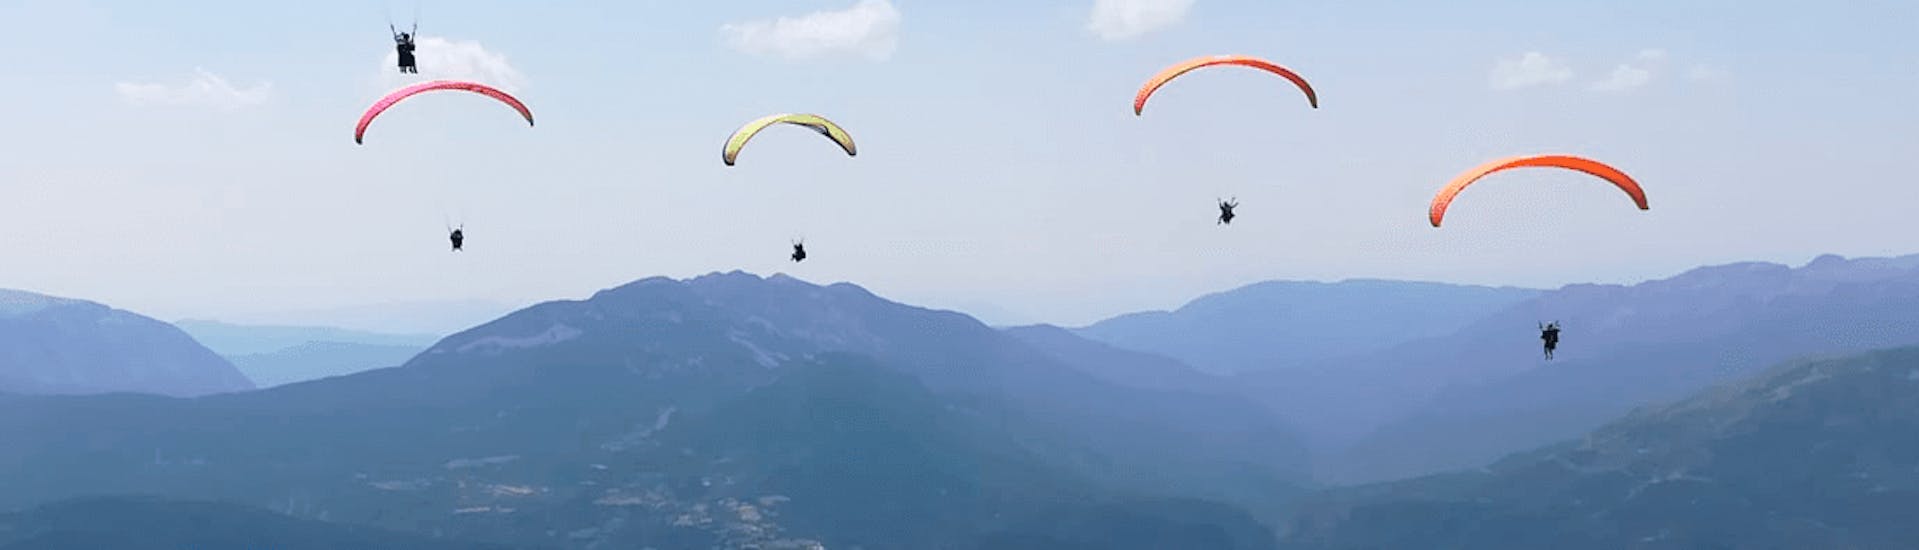 tandem-paragliding-highaltitude-parapente-pirineos-hero